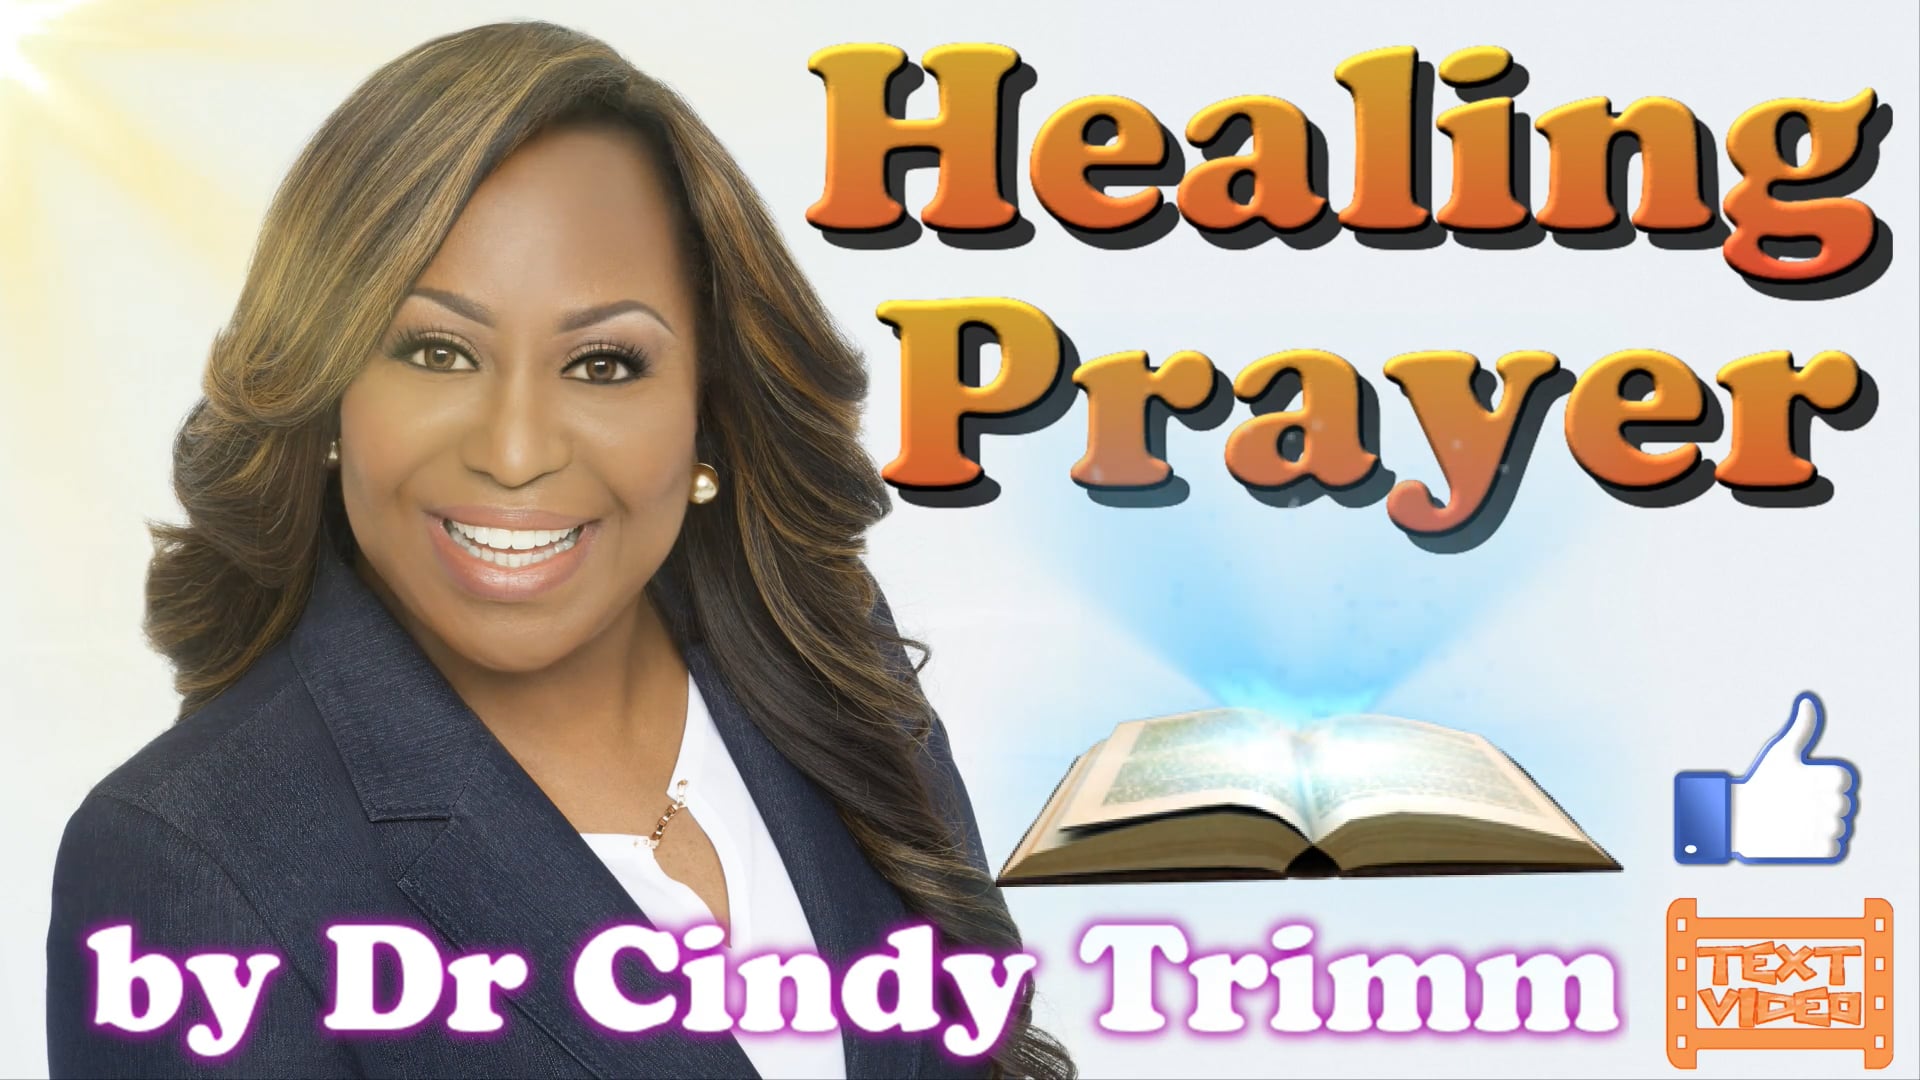 Cindy trimm morning prayer